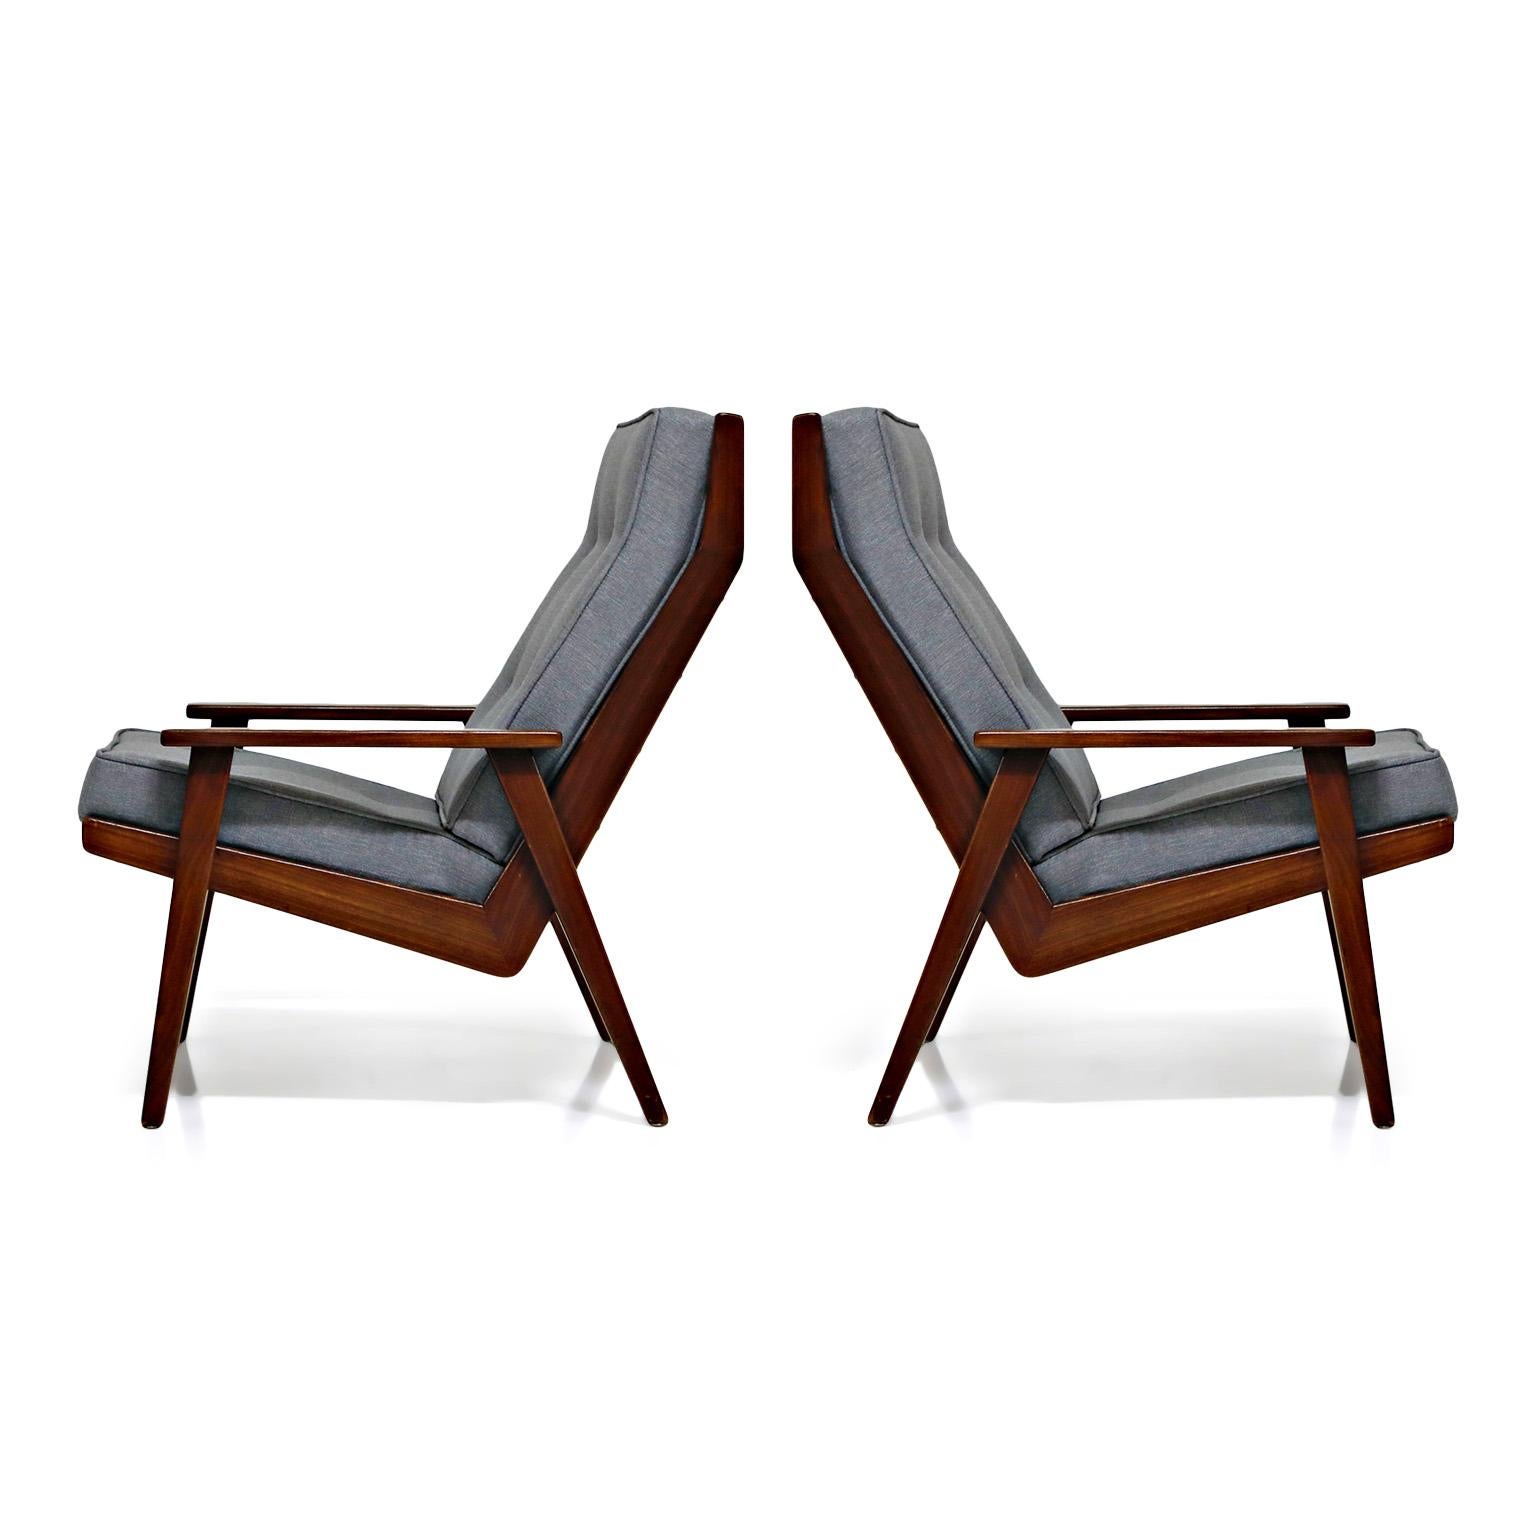 Mid-Century Modern Pair of Lotus Chairs by Robert Parry for Gelderland, Denmark 1950s, Restored